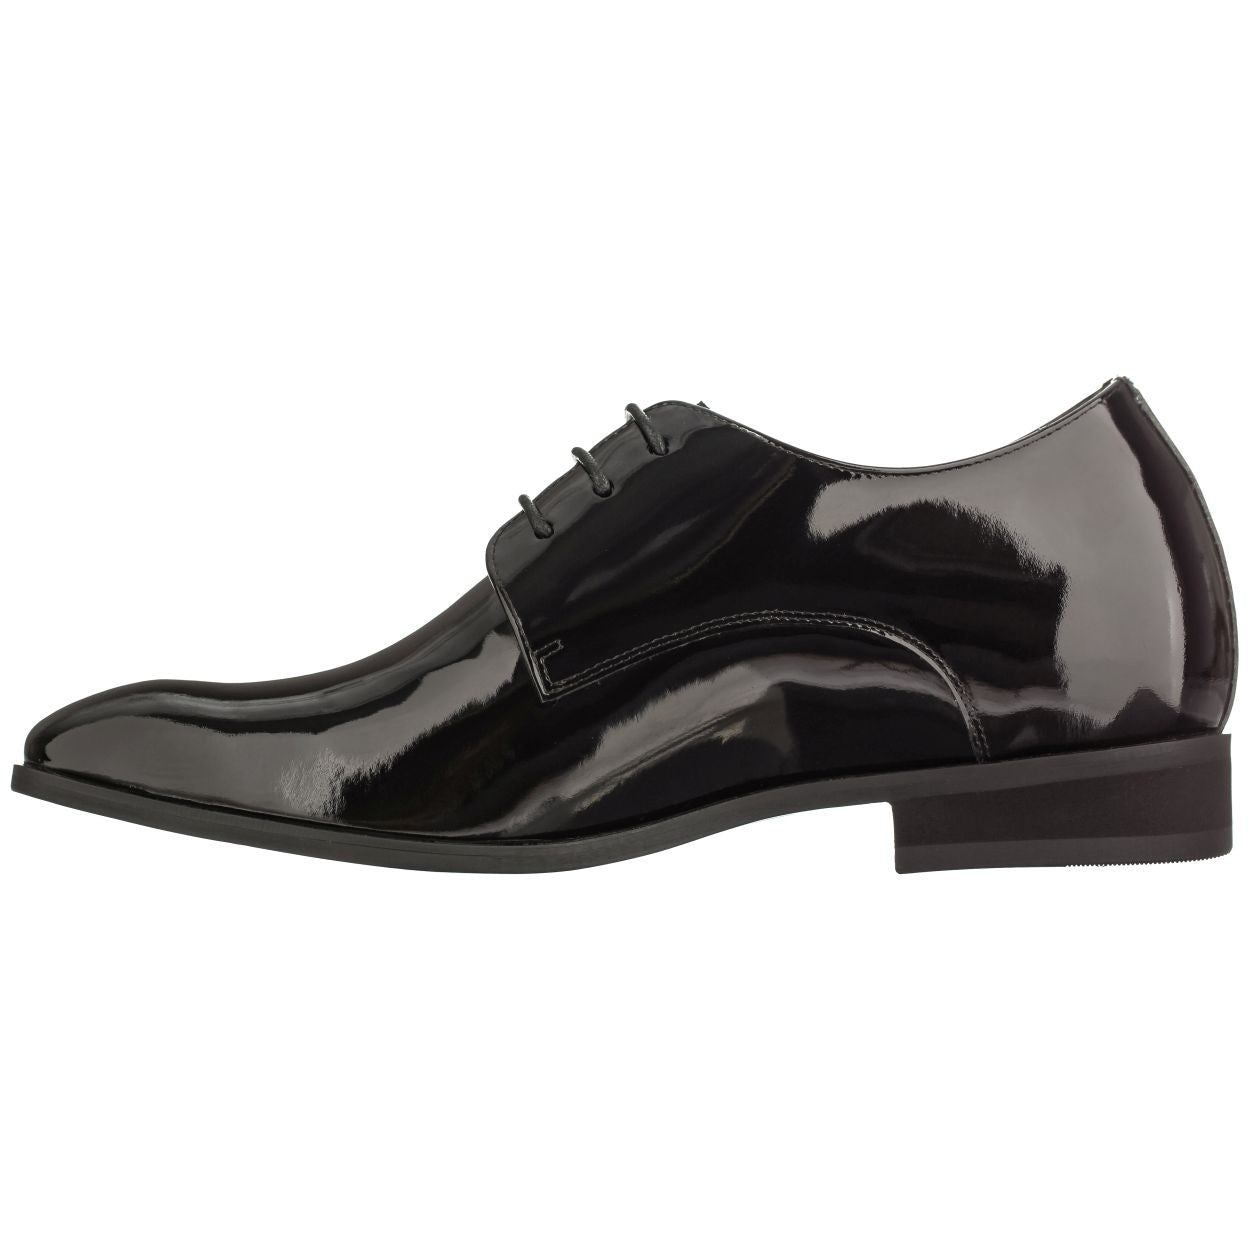 TOTO Patent Leather Dress Shoes - TallMenShoes.com – Tallmenshoes.com